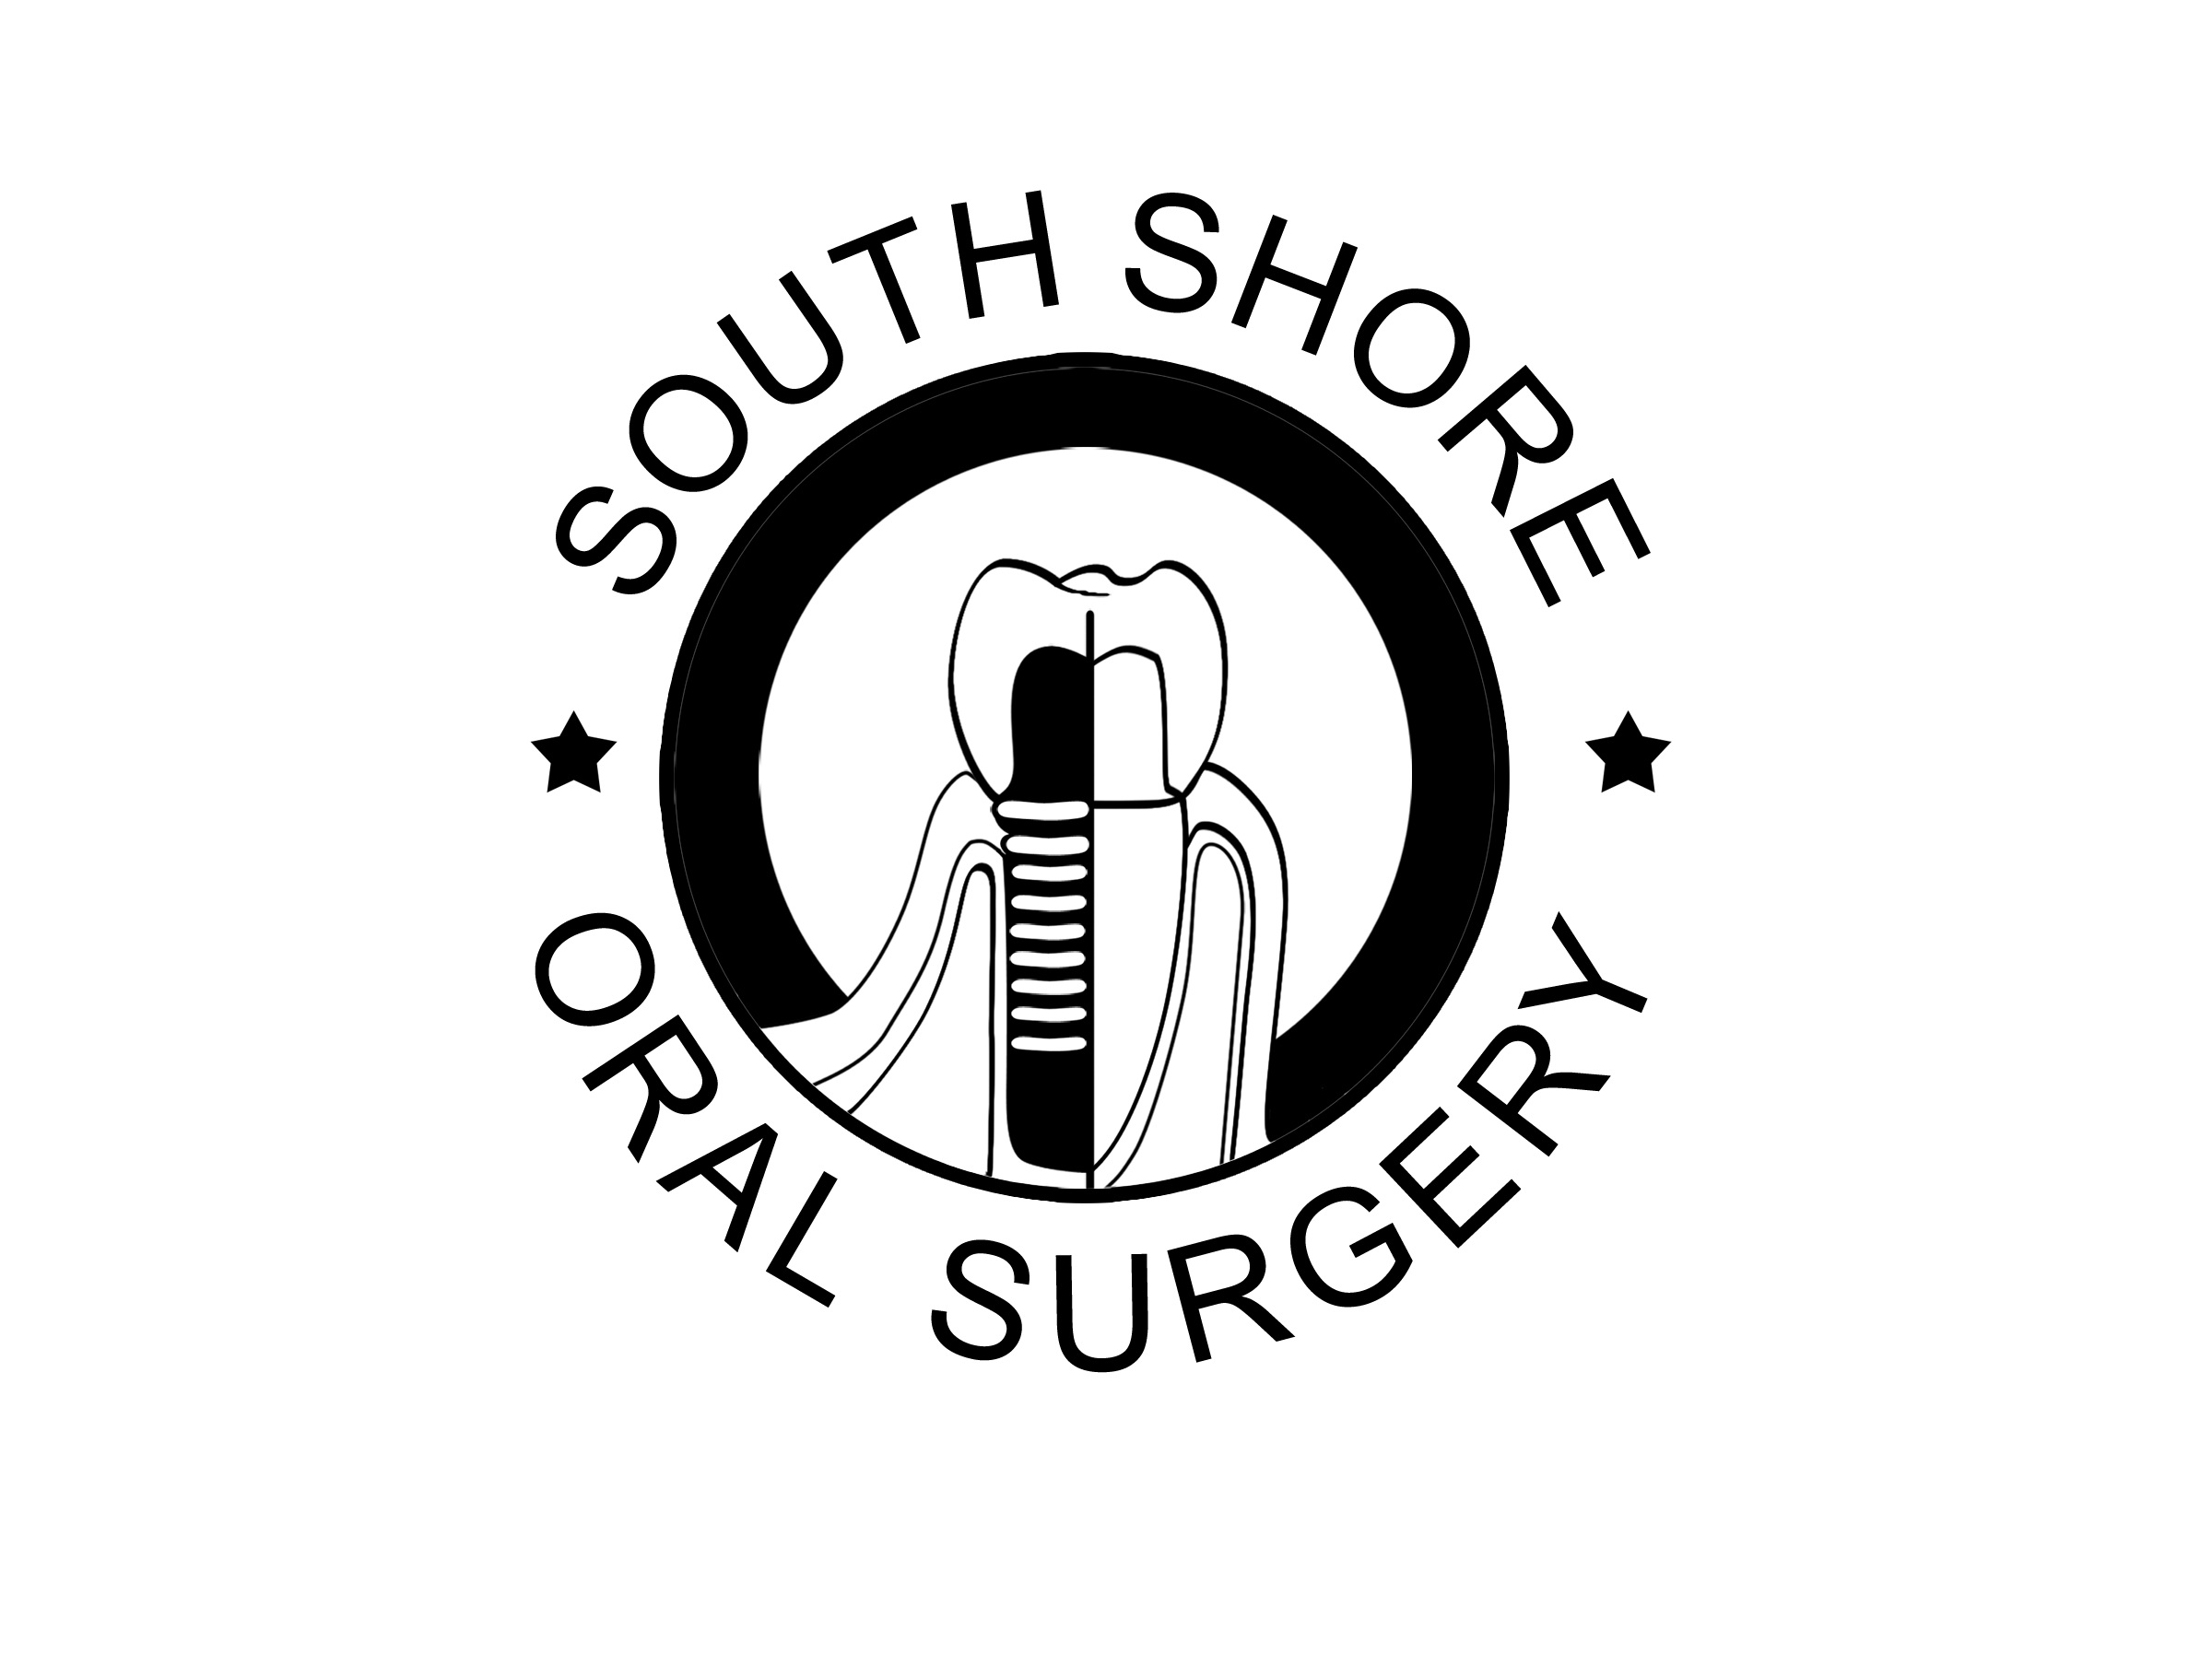 South Shore Oral Surgery